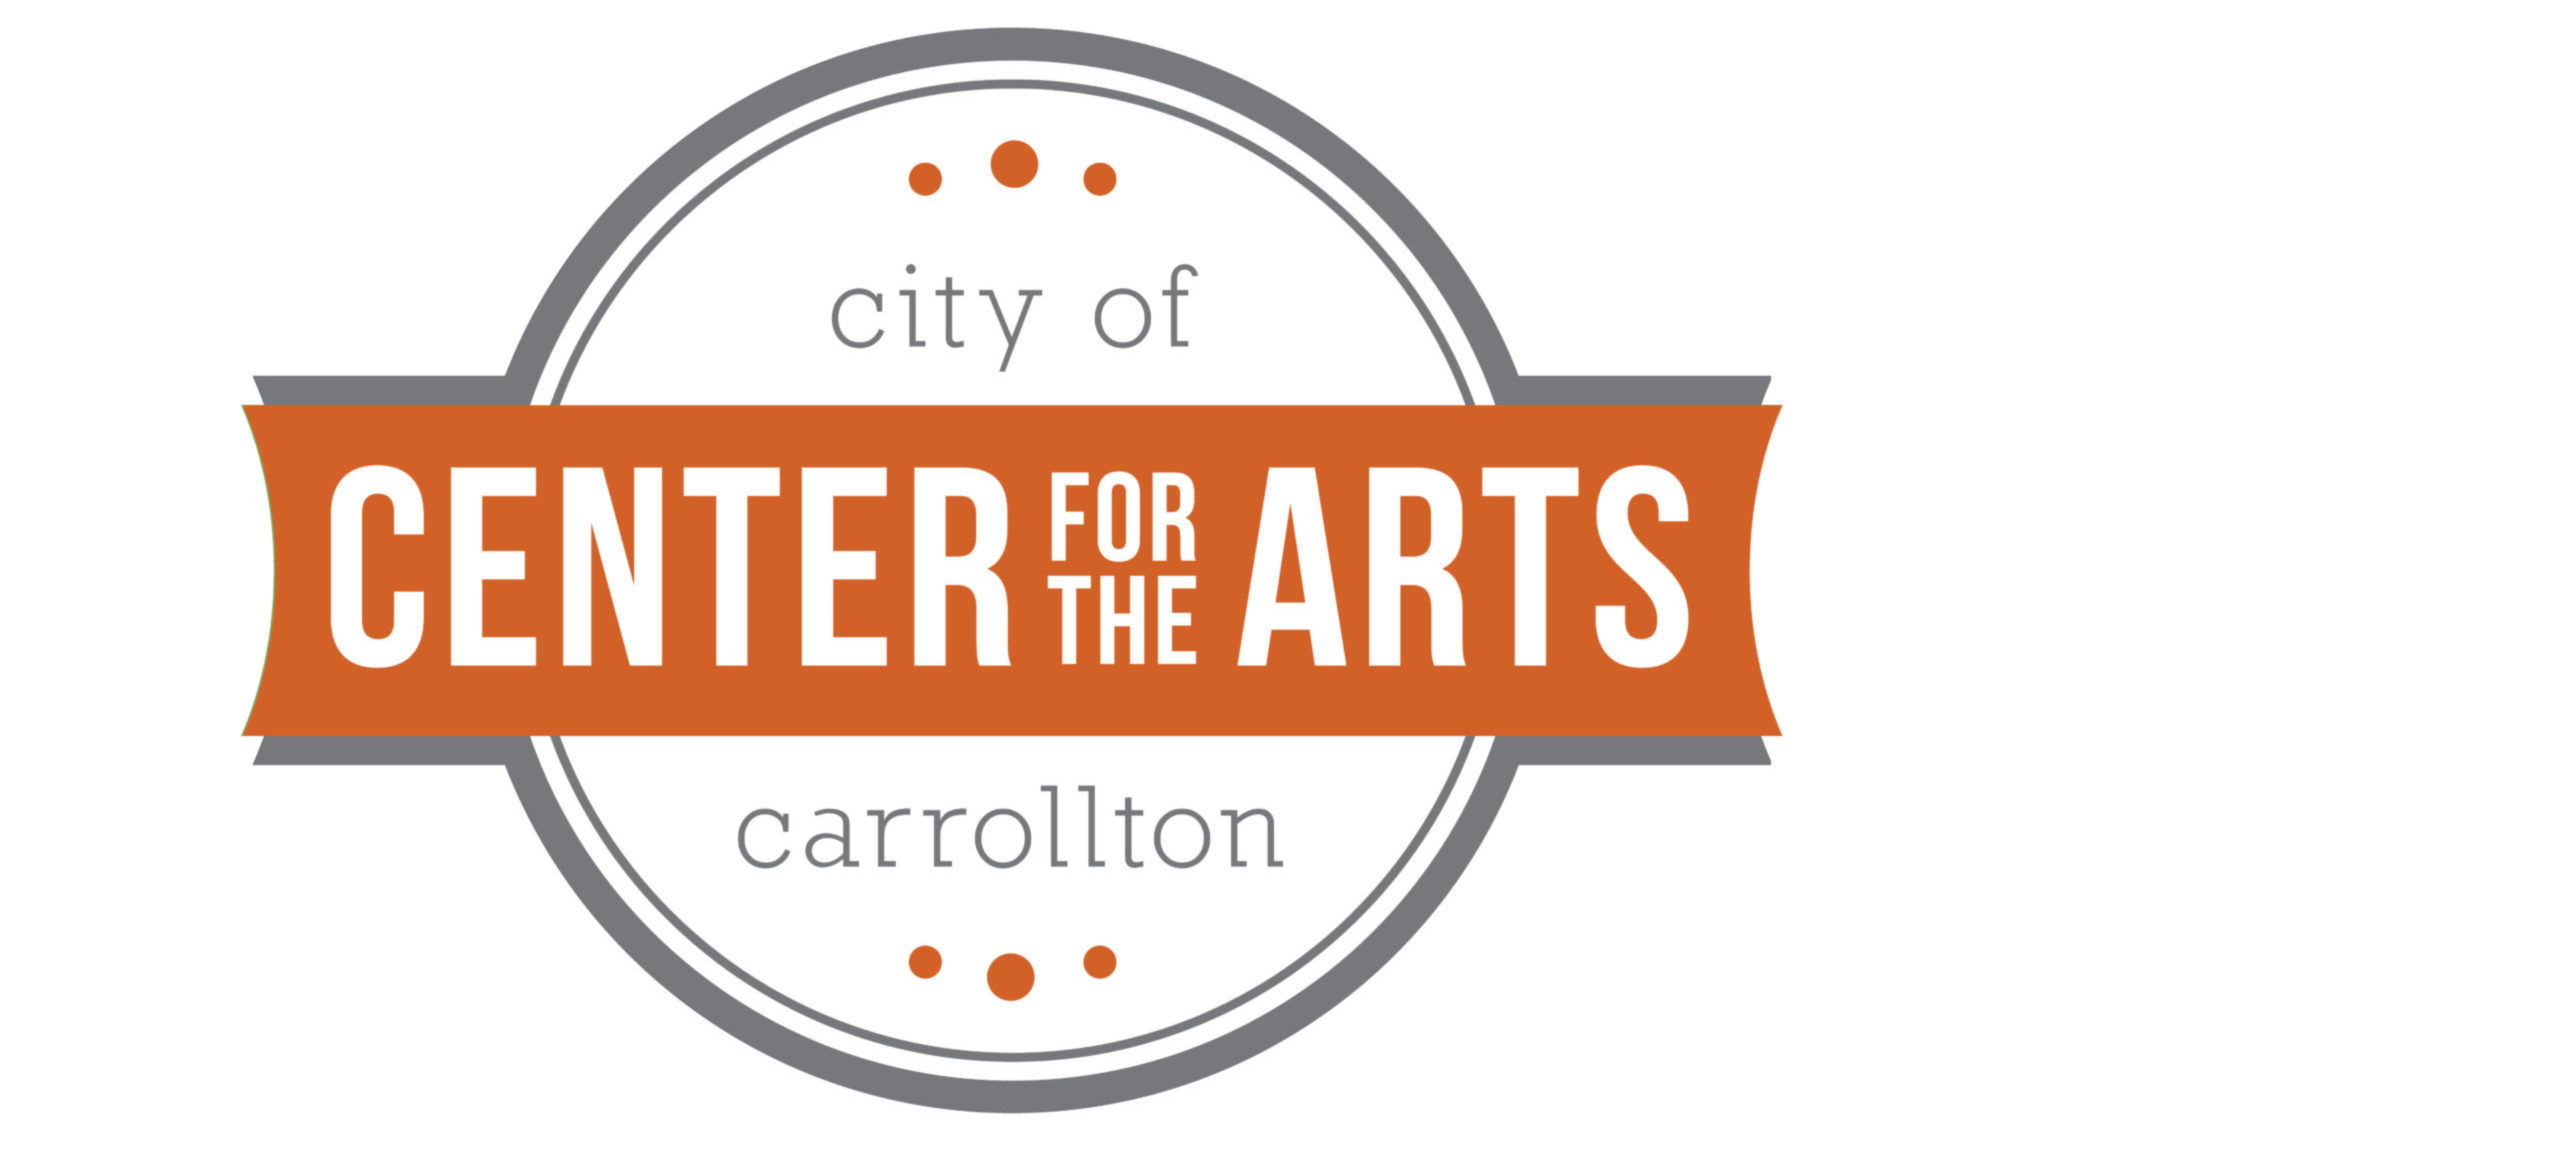 Carrollton Center for the Arts